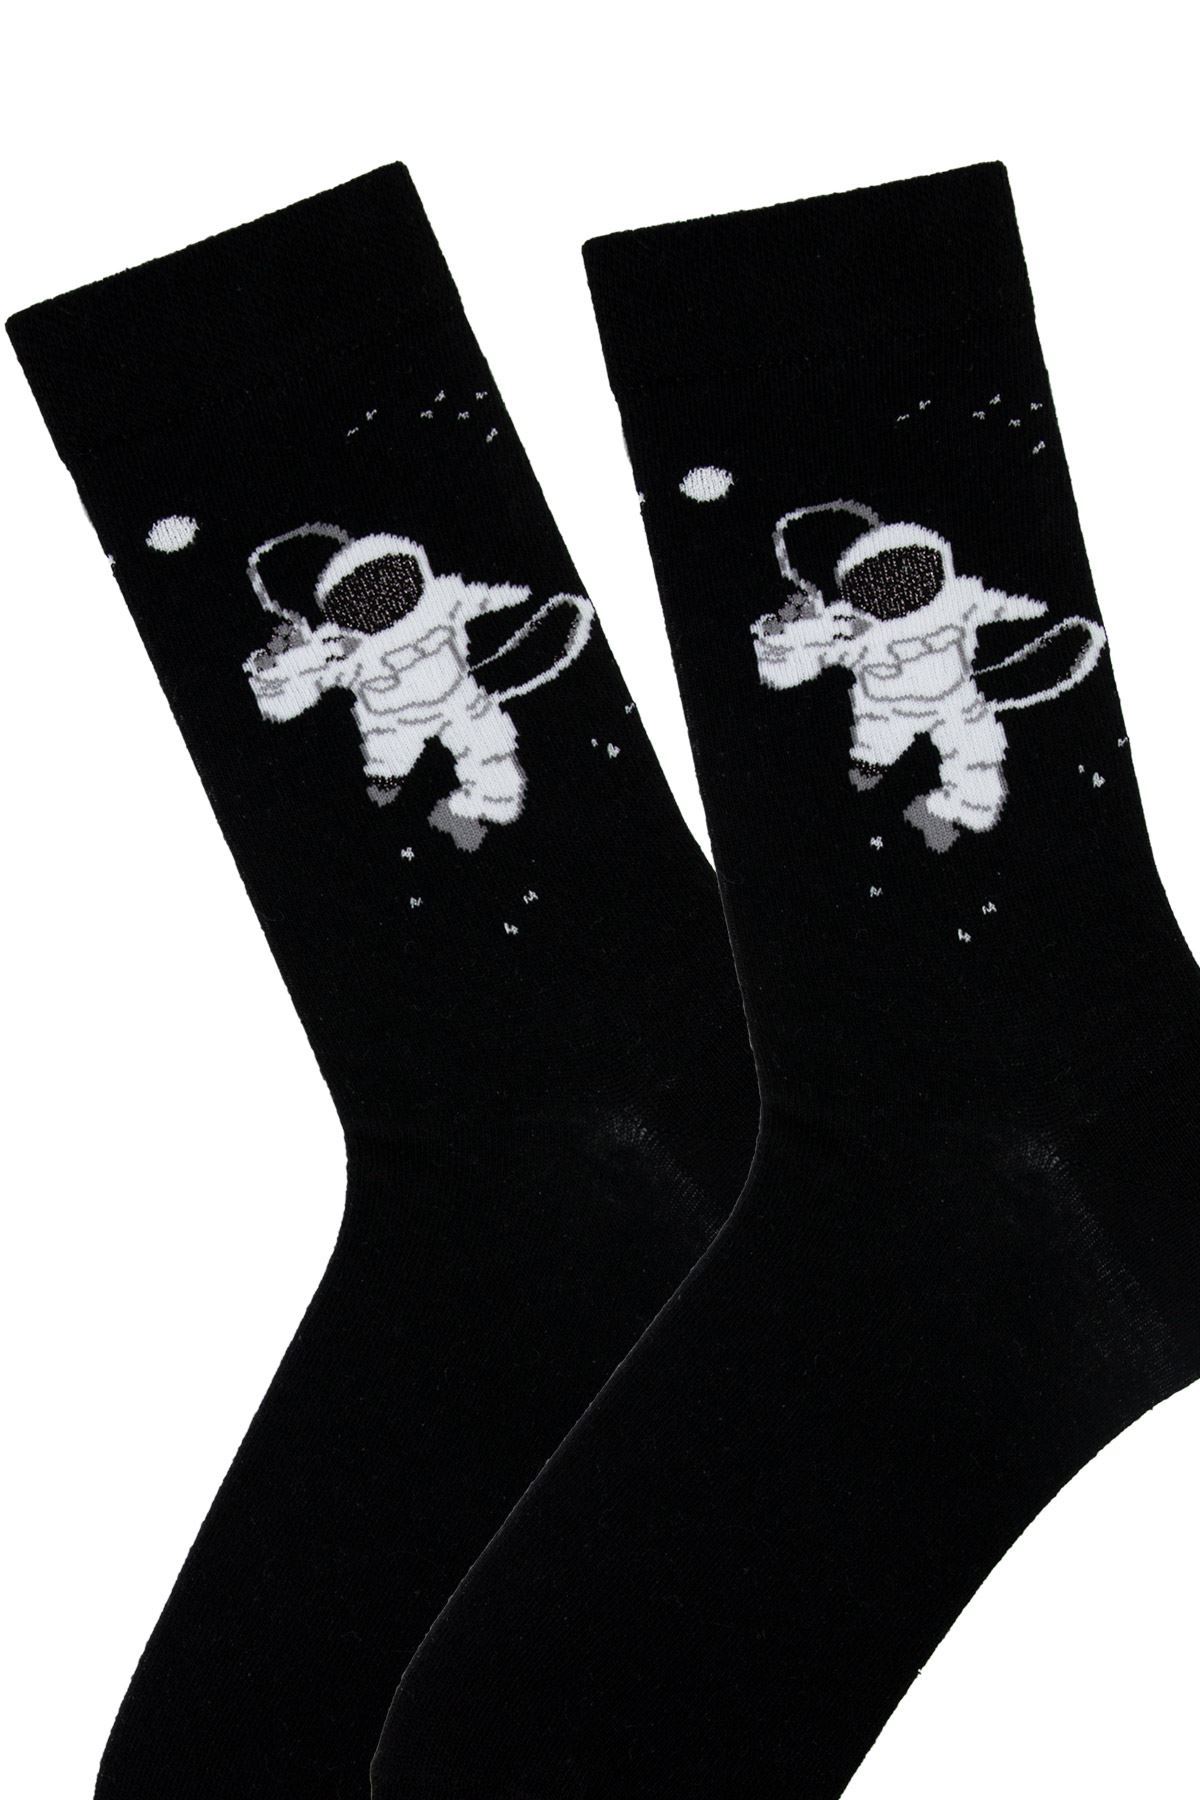 BOY SOCKS SPACE THEME | Buy Branded Wholesale Socks Online At ...